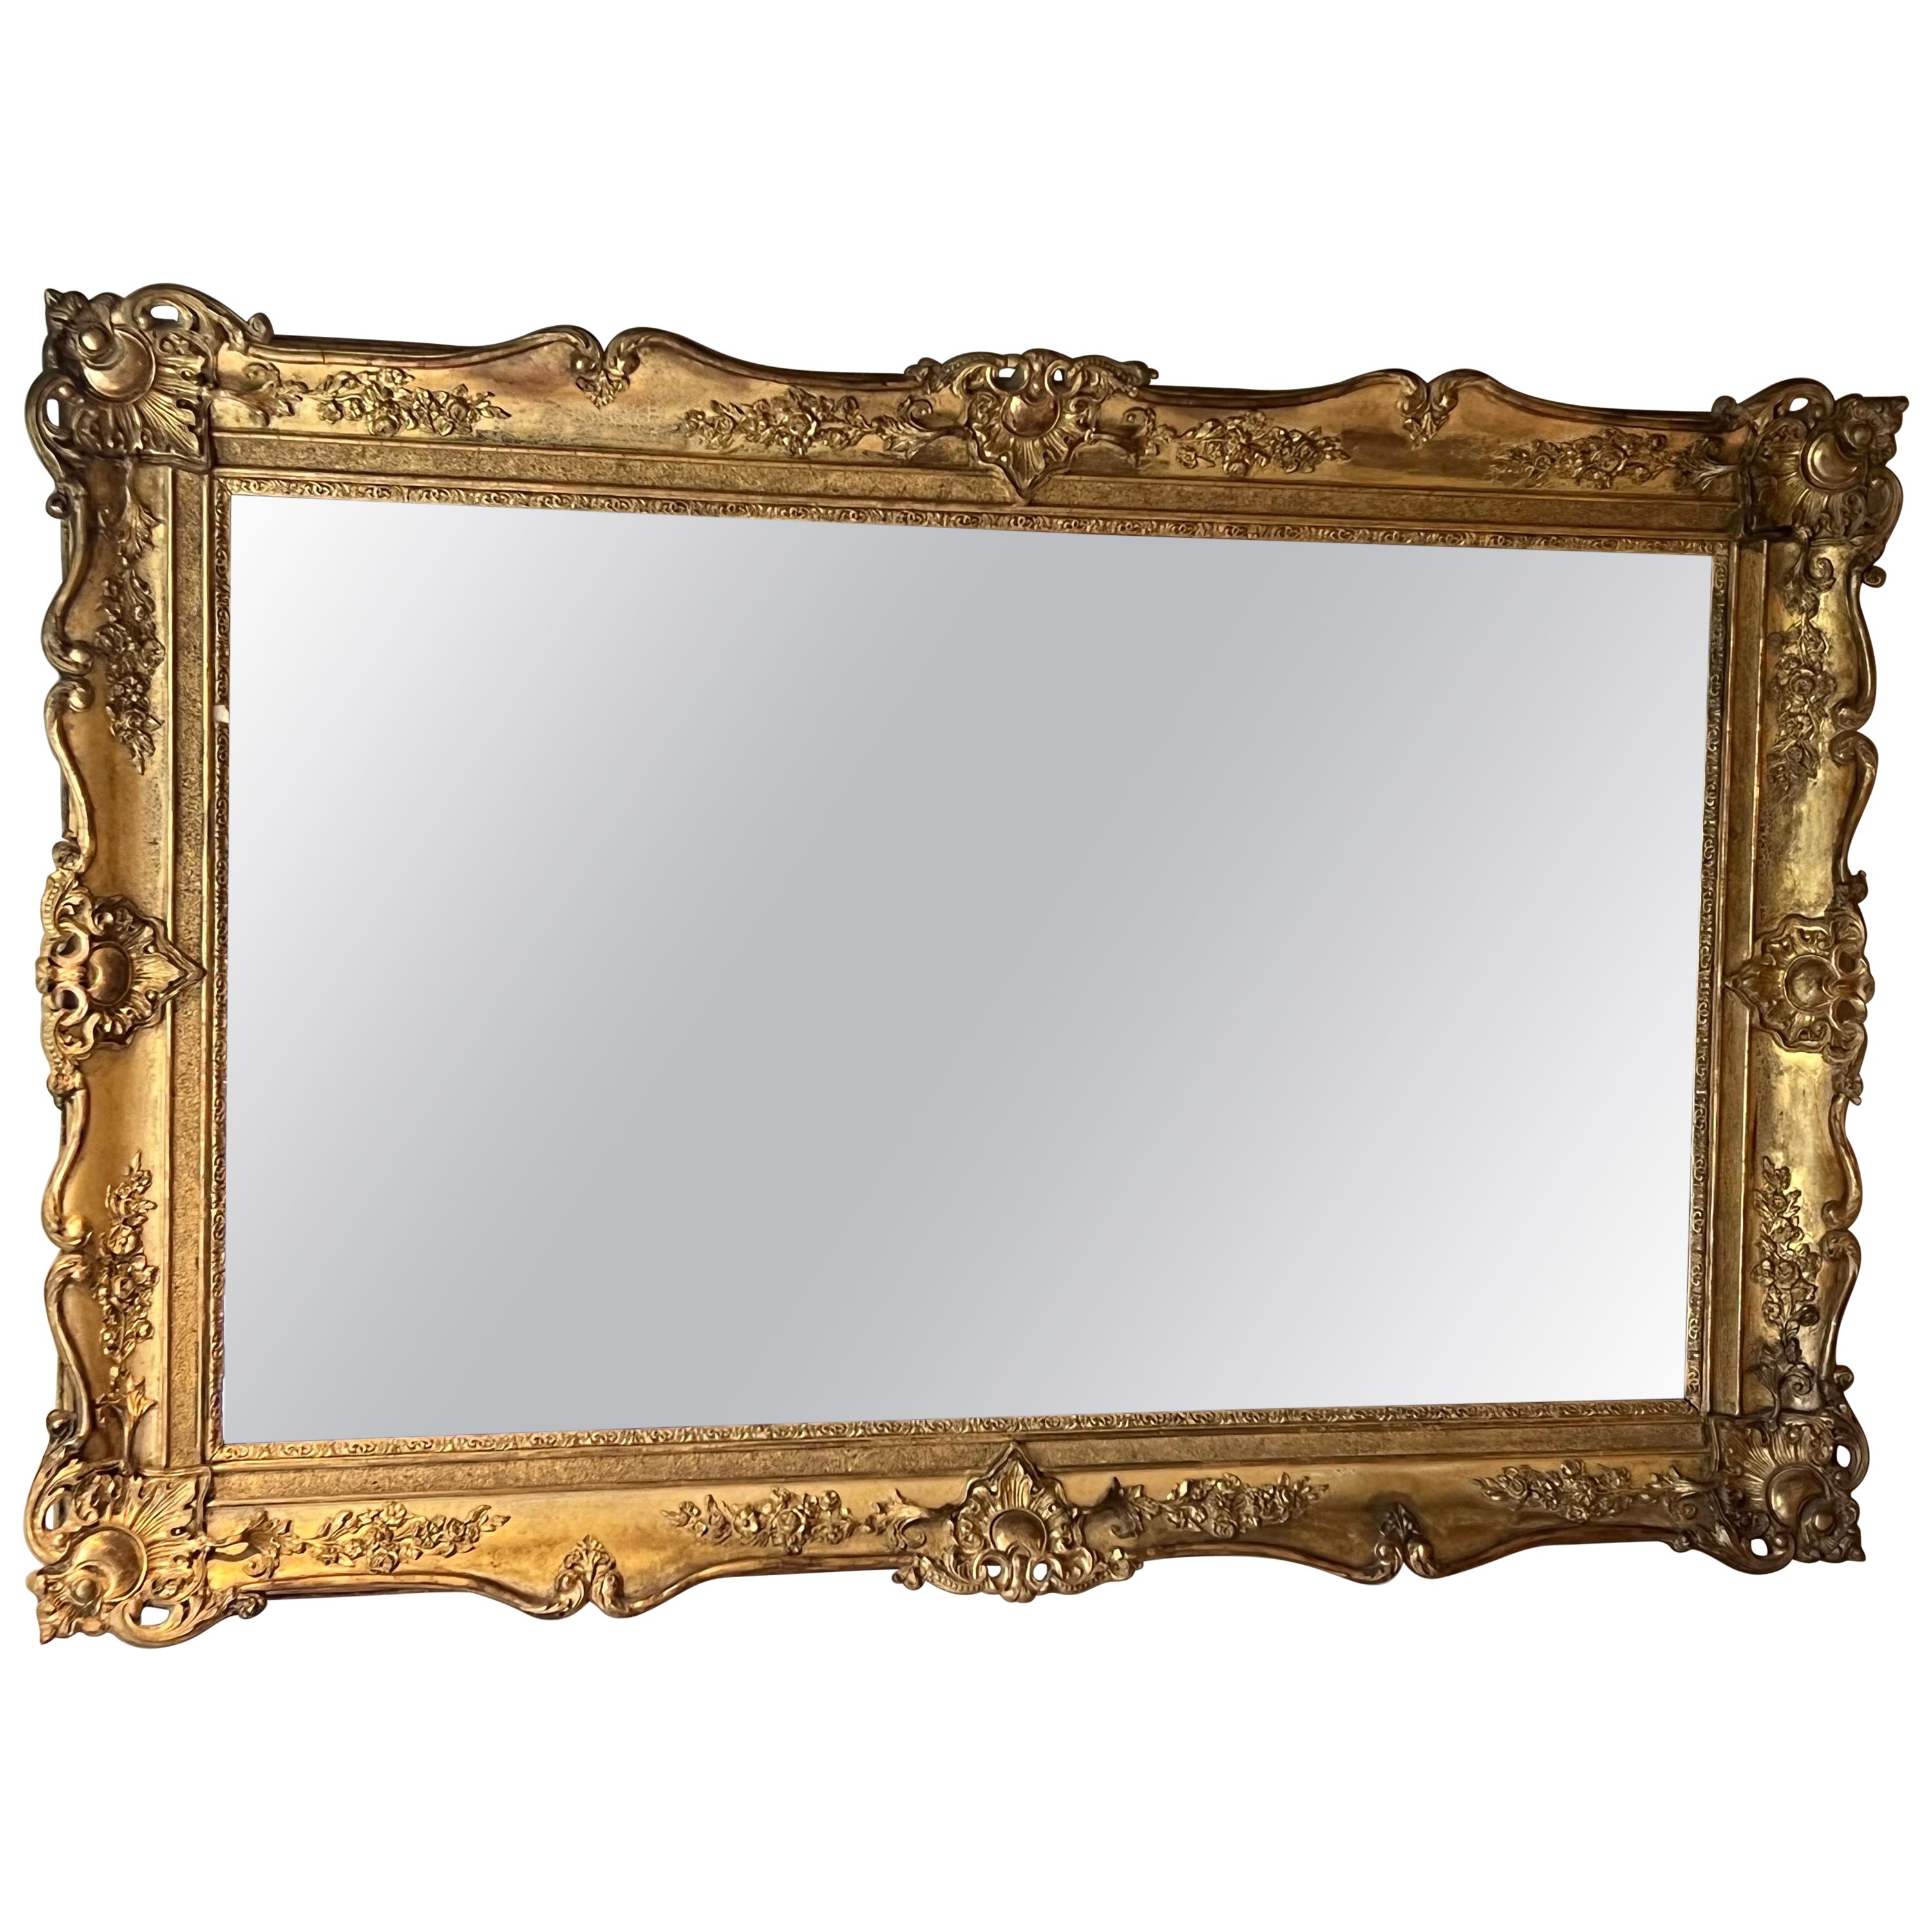 Miroir rectangulaire en bois doré Napoléon III du XIXe siècle